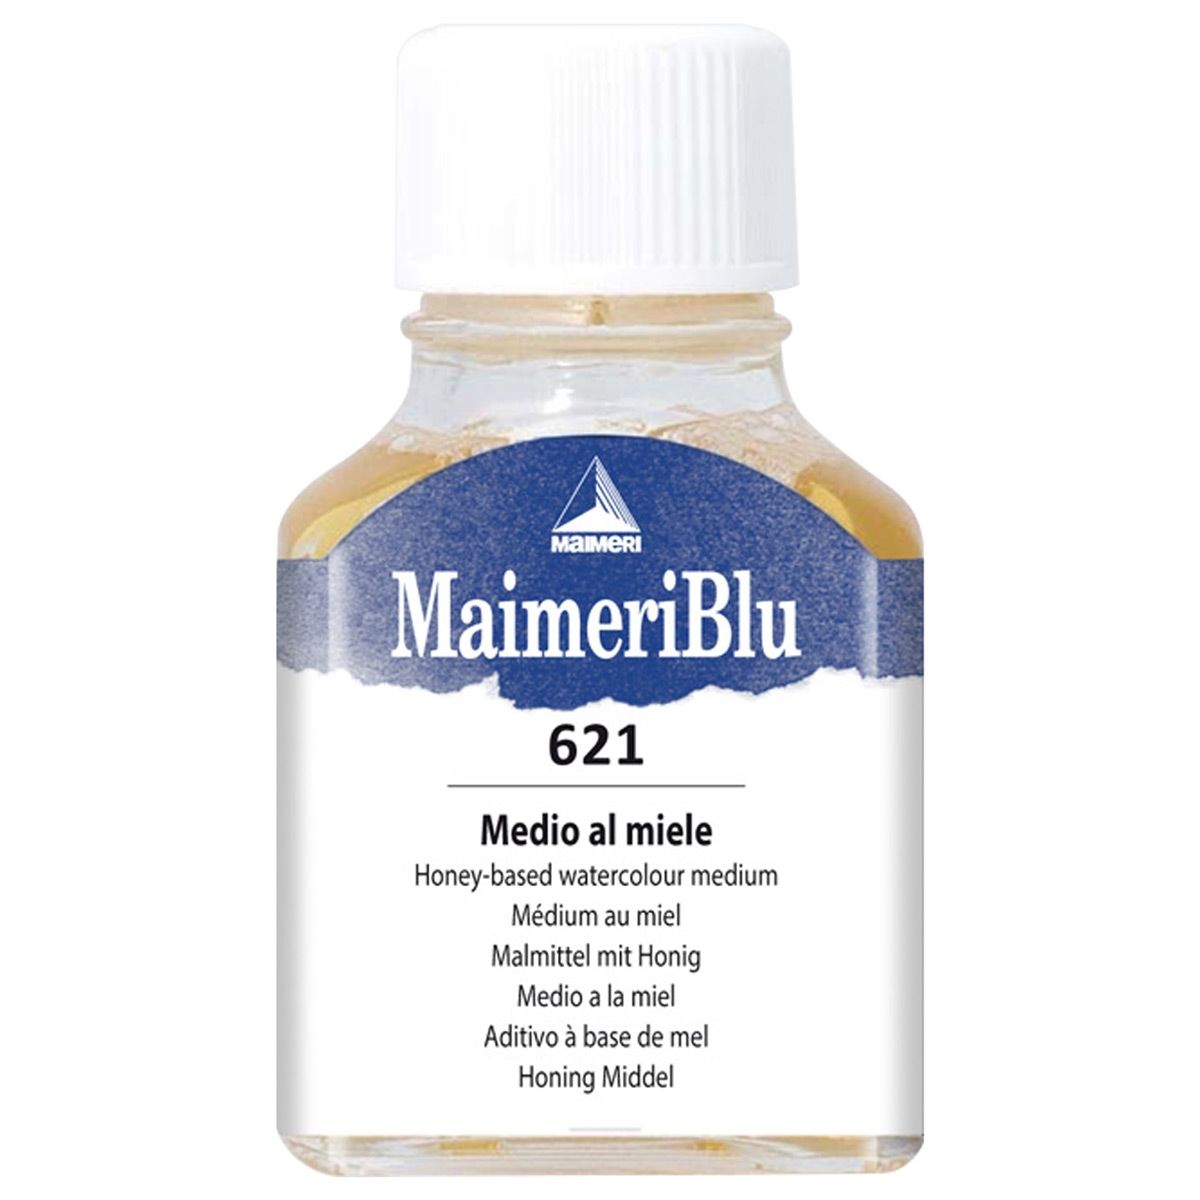 MaimeriBlu Honey-Based Watercolor Medium - 75ml